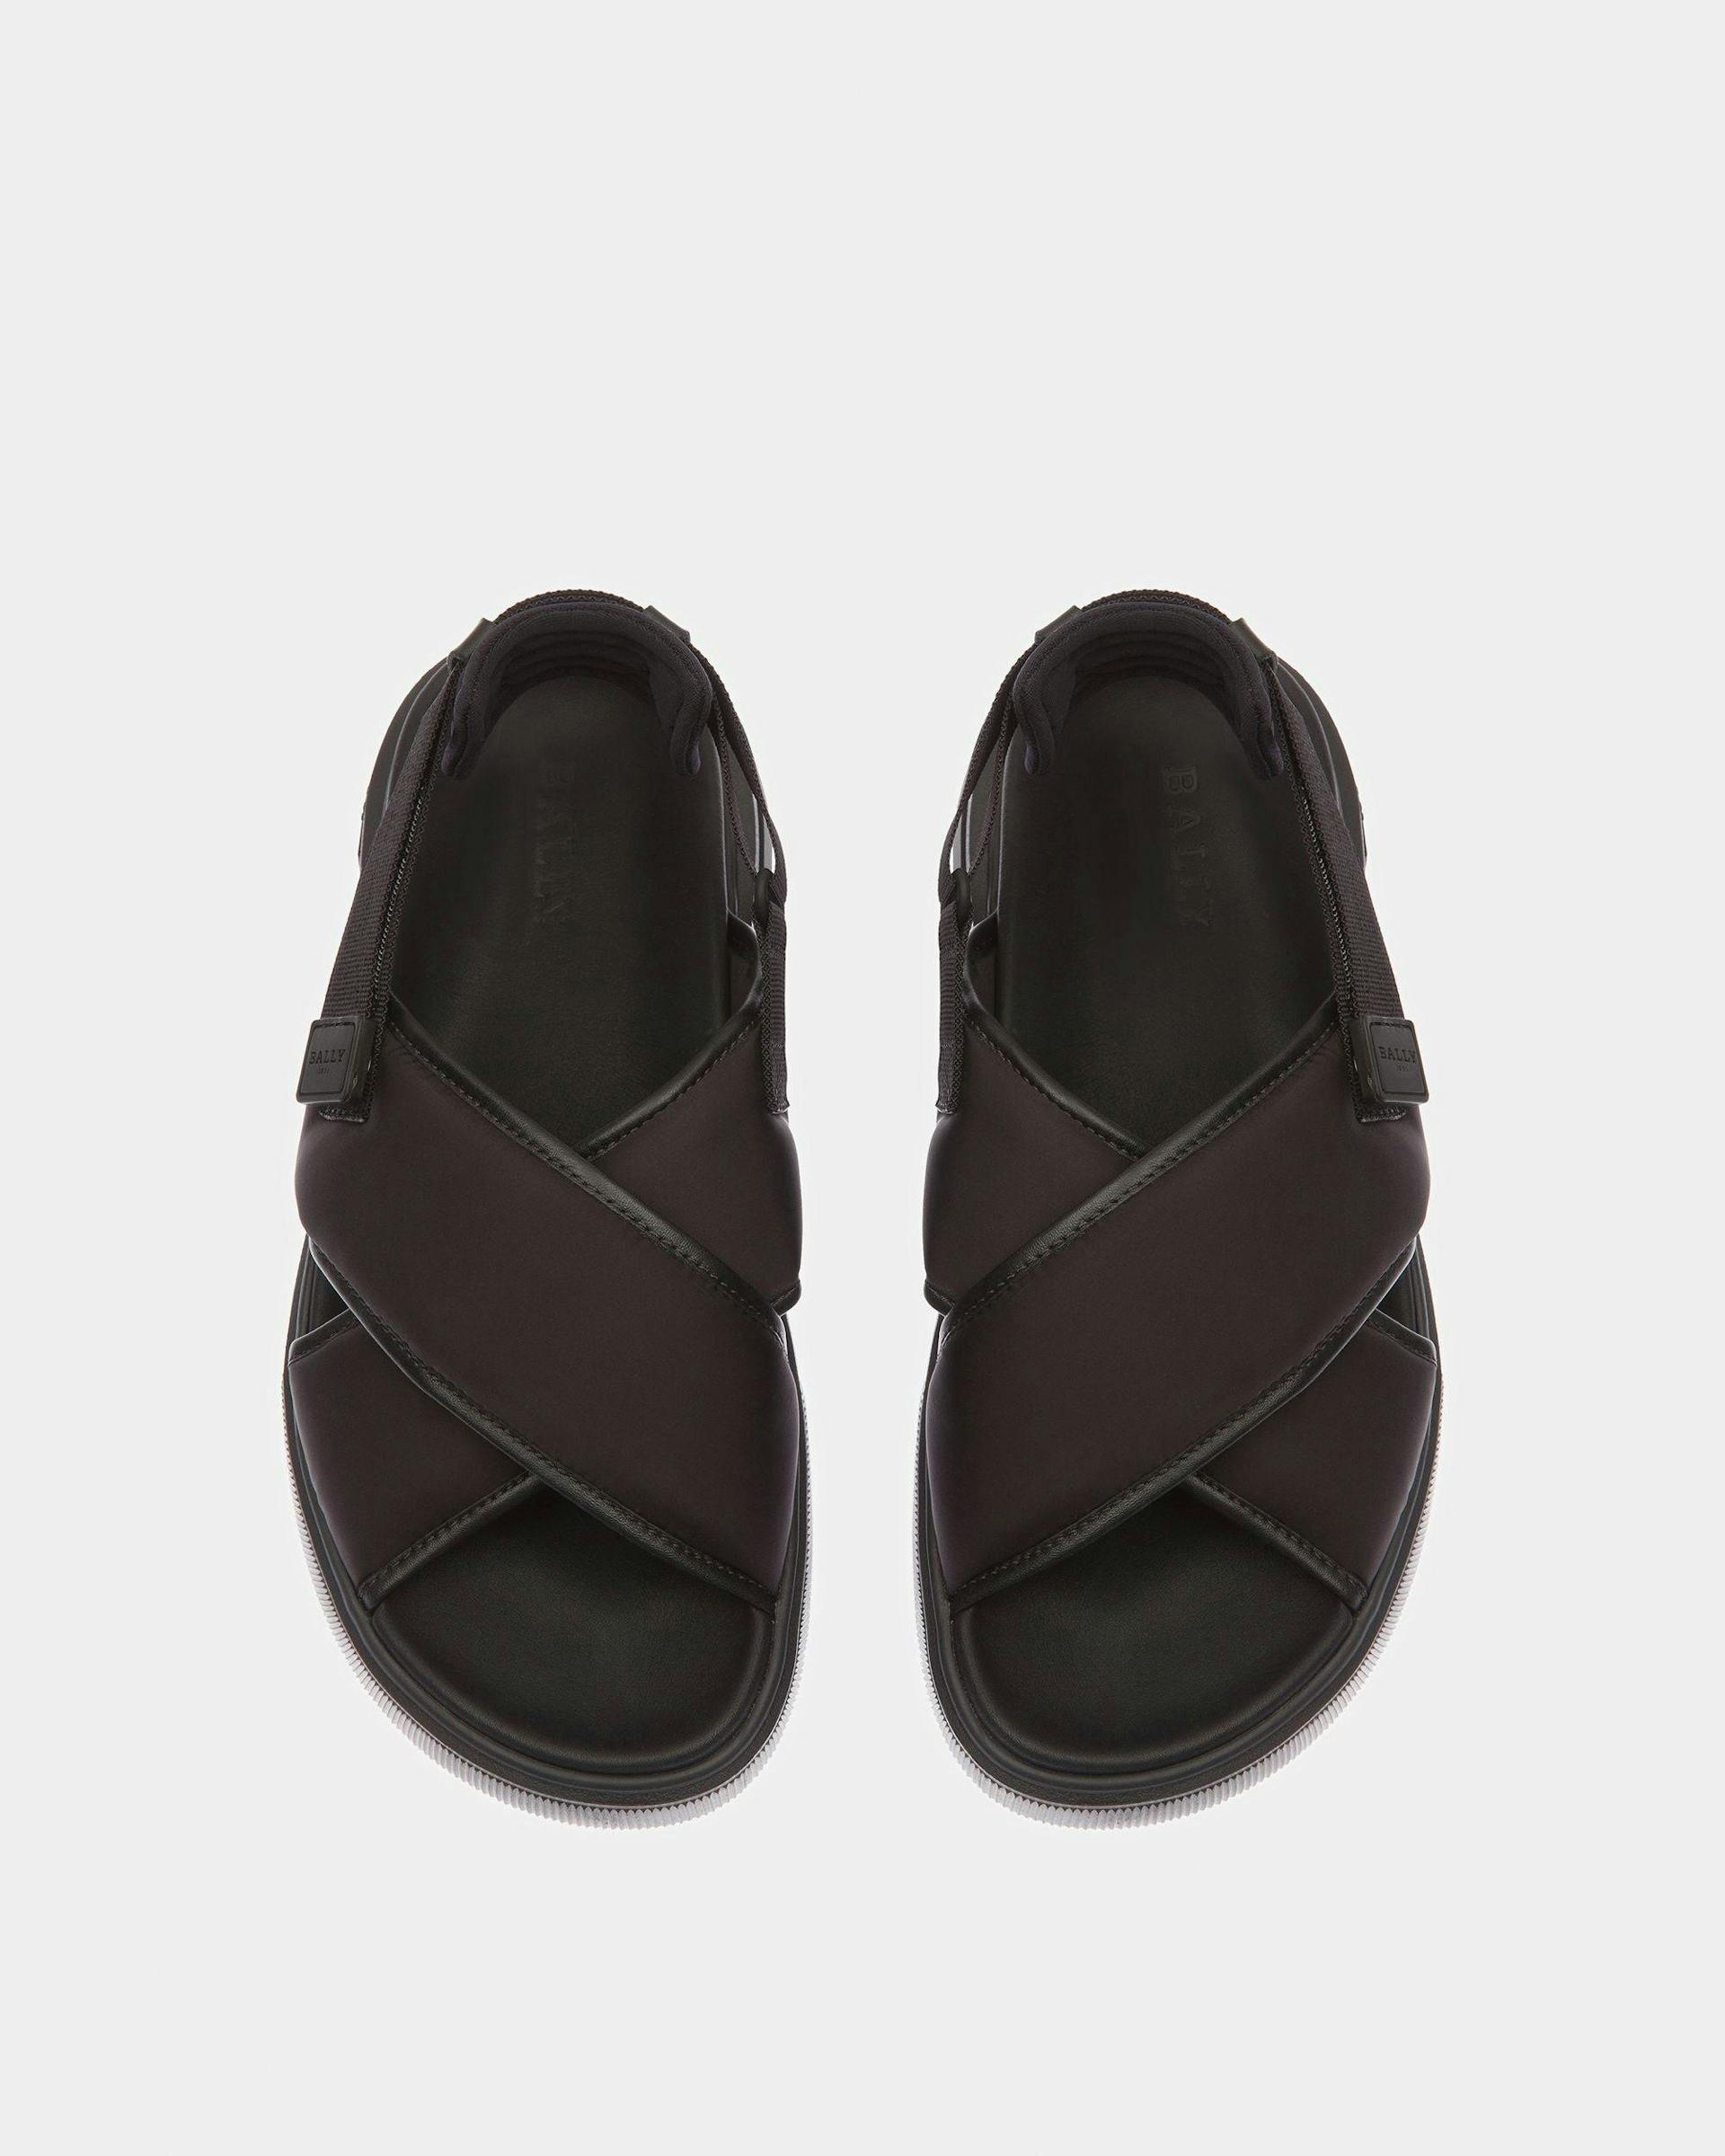 Jodye Leather And Nylon Sandals In Black - Women's - Bally - 02